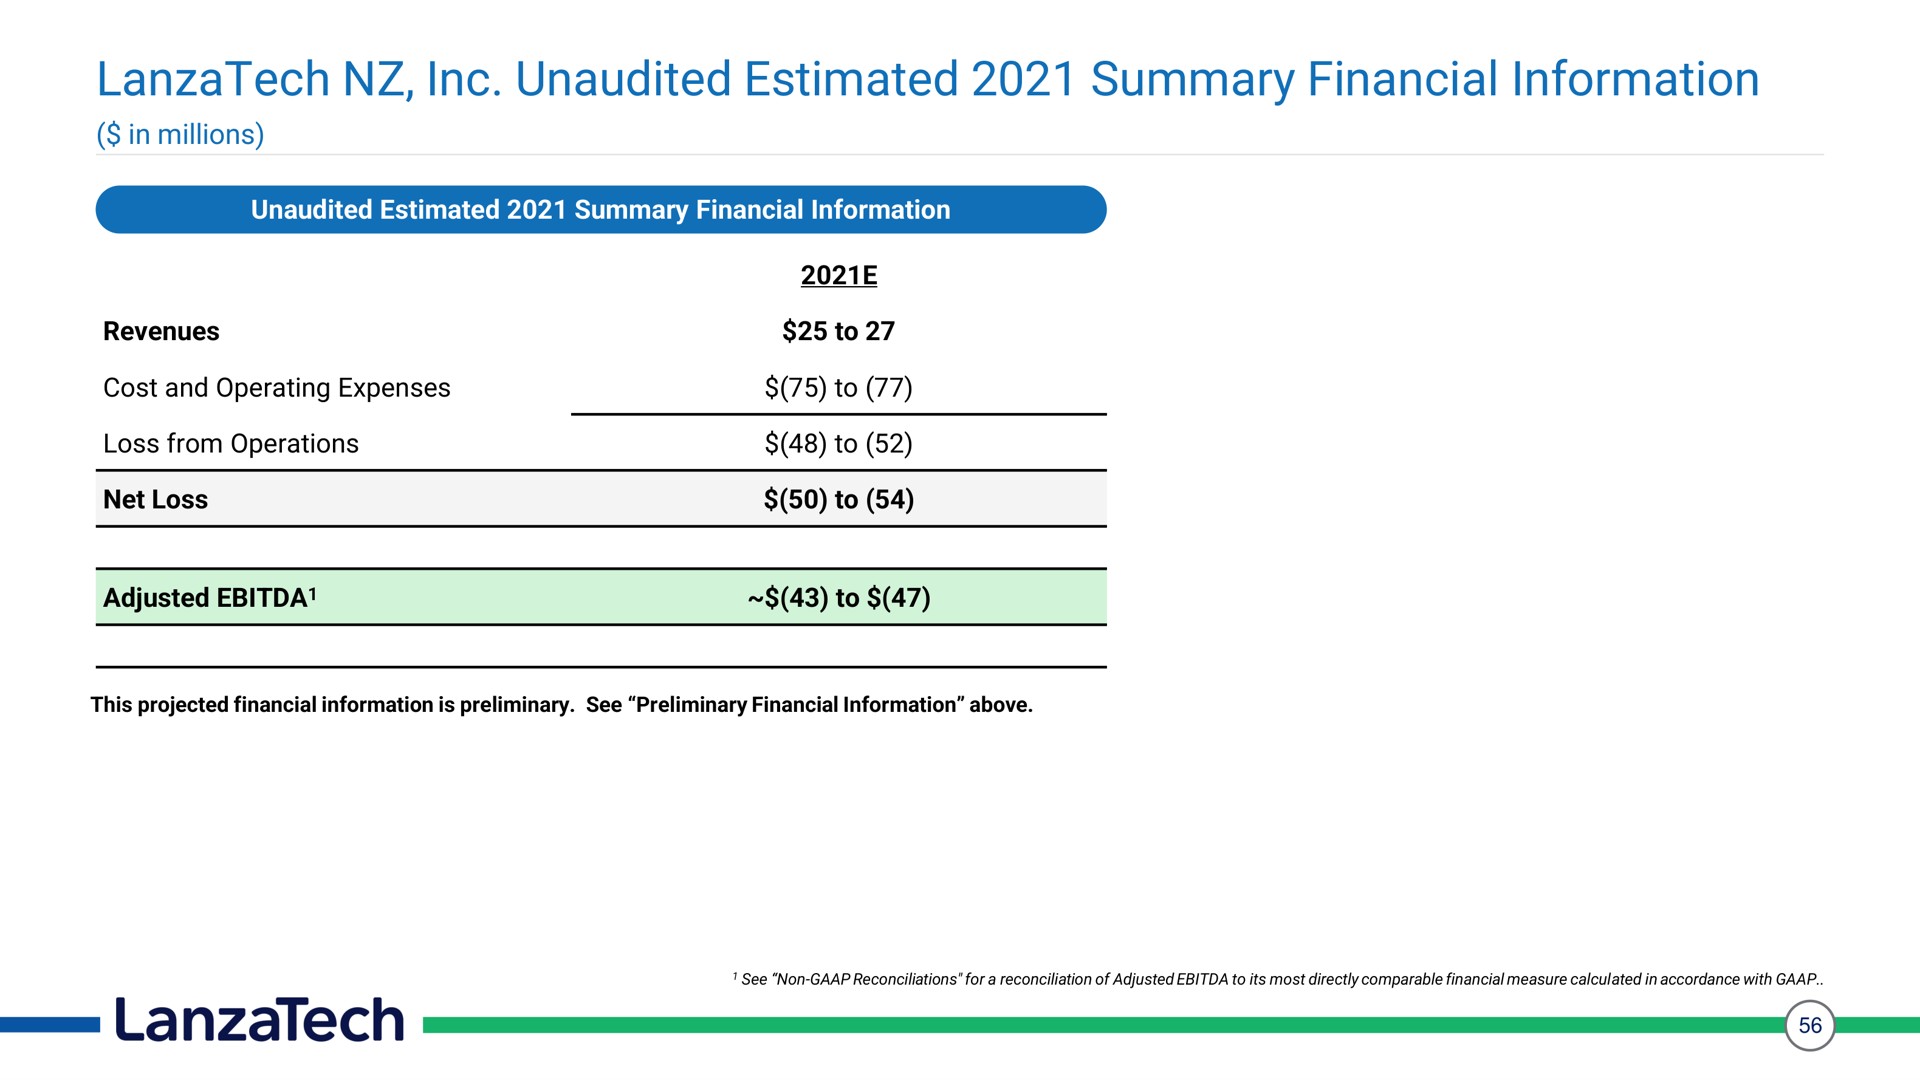 unaudited estimated summary financial information | LanzaTech